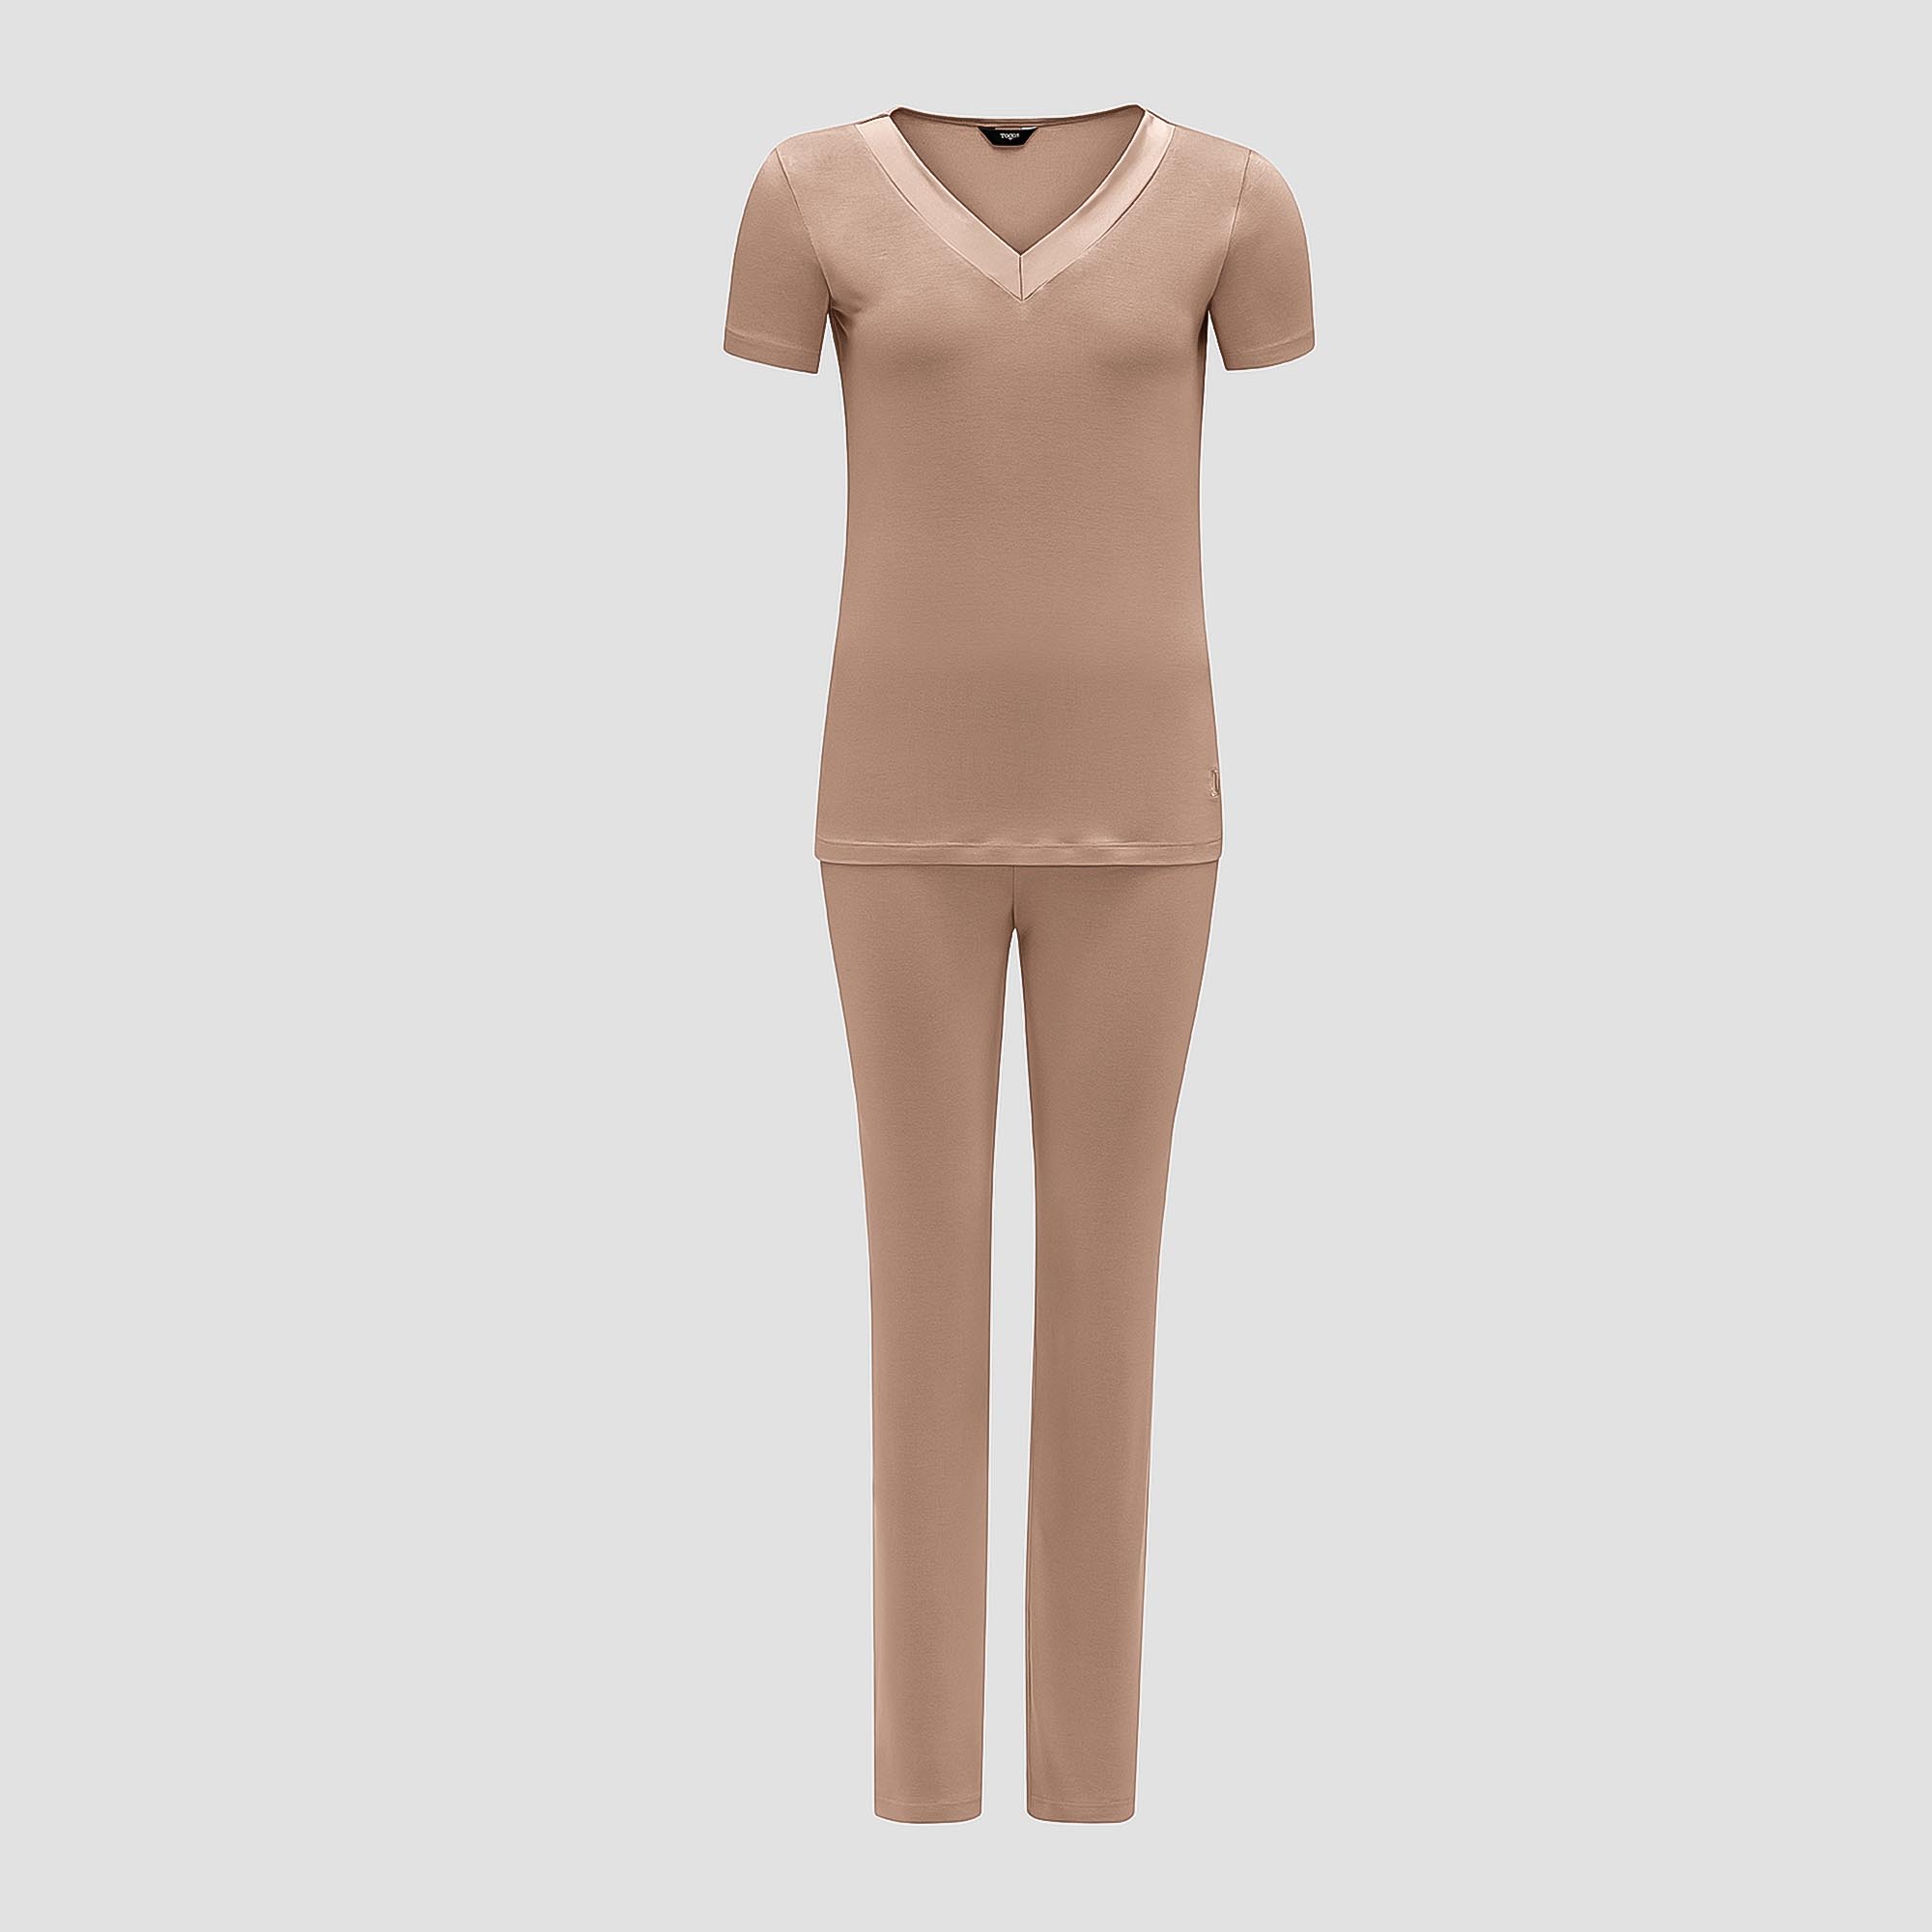 Пижама Togas Ингелла розово-бежевая женская XXL(52) 2 предмета пижама футболка брюки